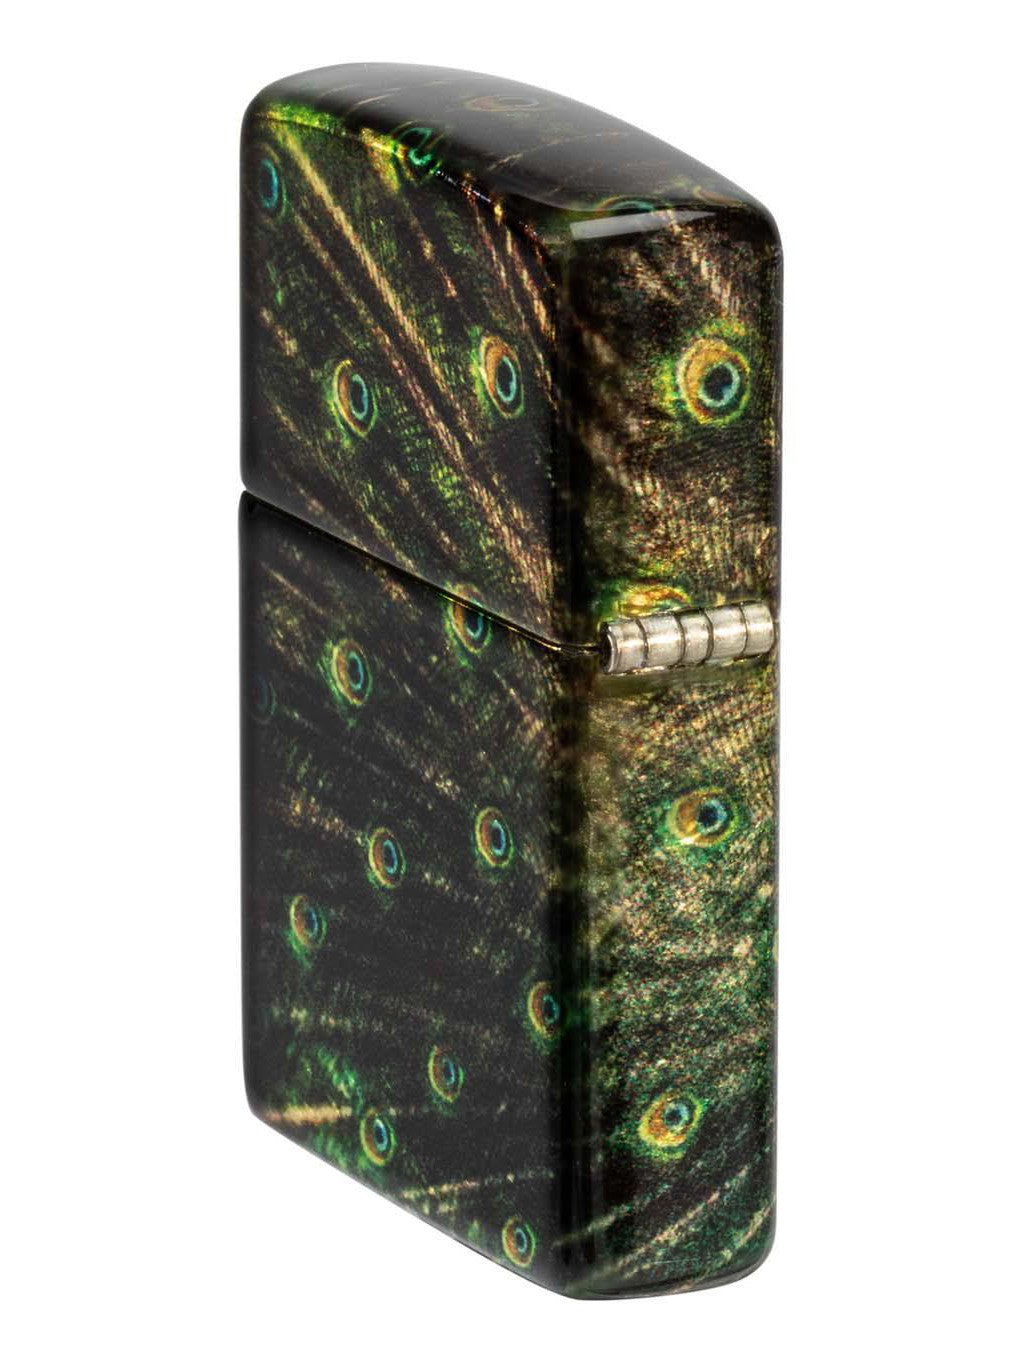 Zippo Lighter: Peacock Design - 540 Tumbled Brass 48846